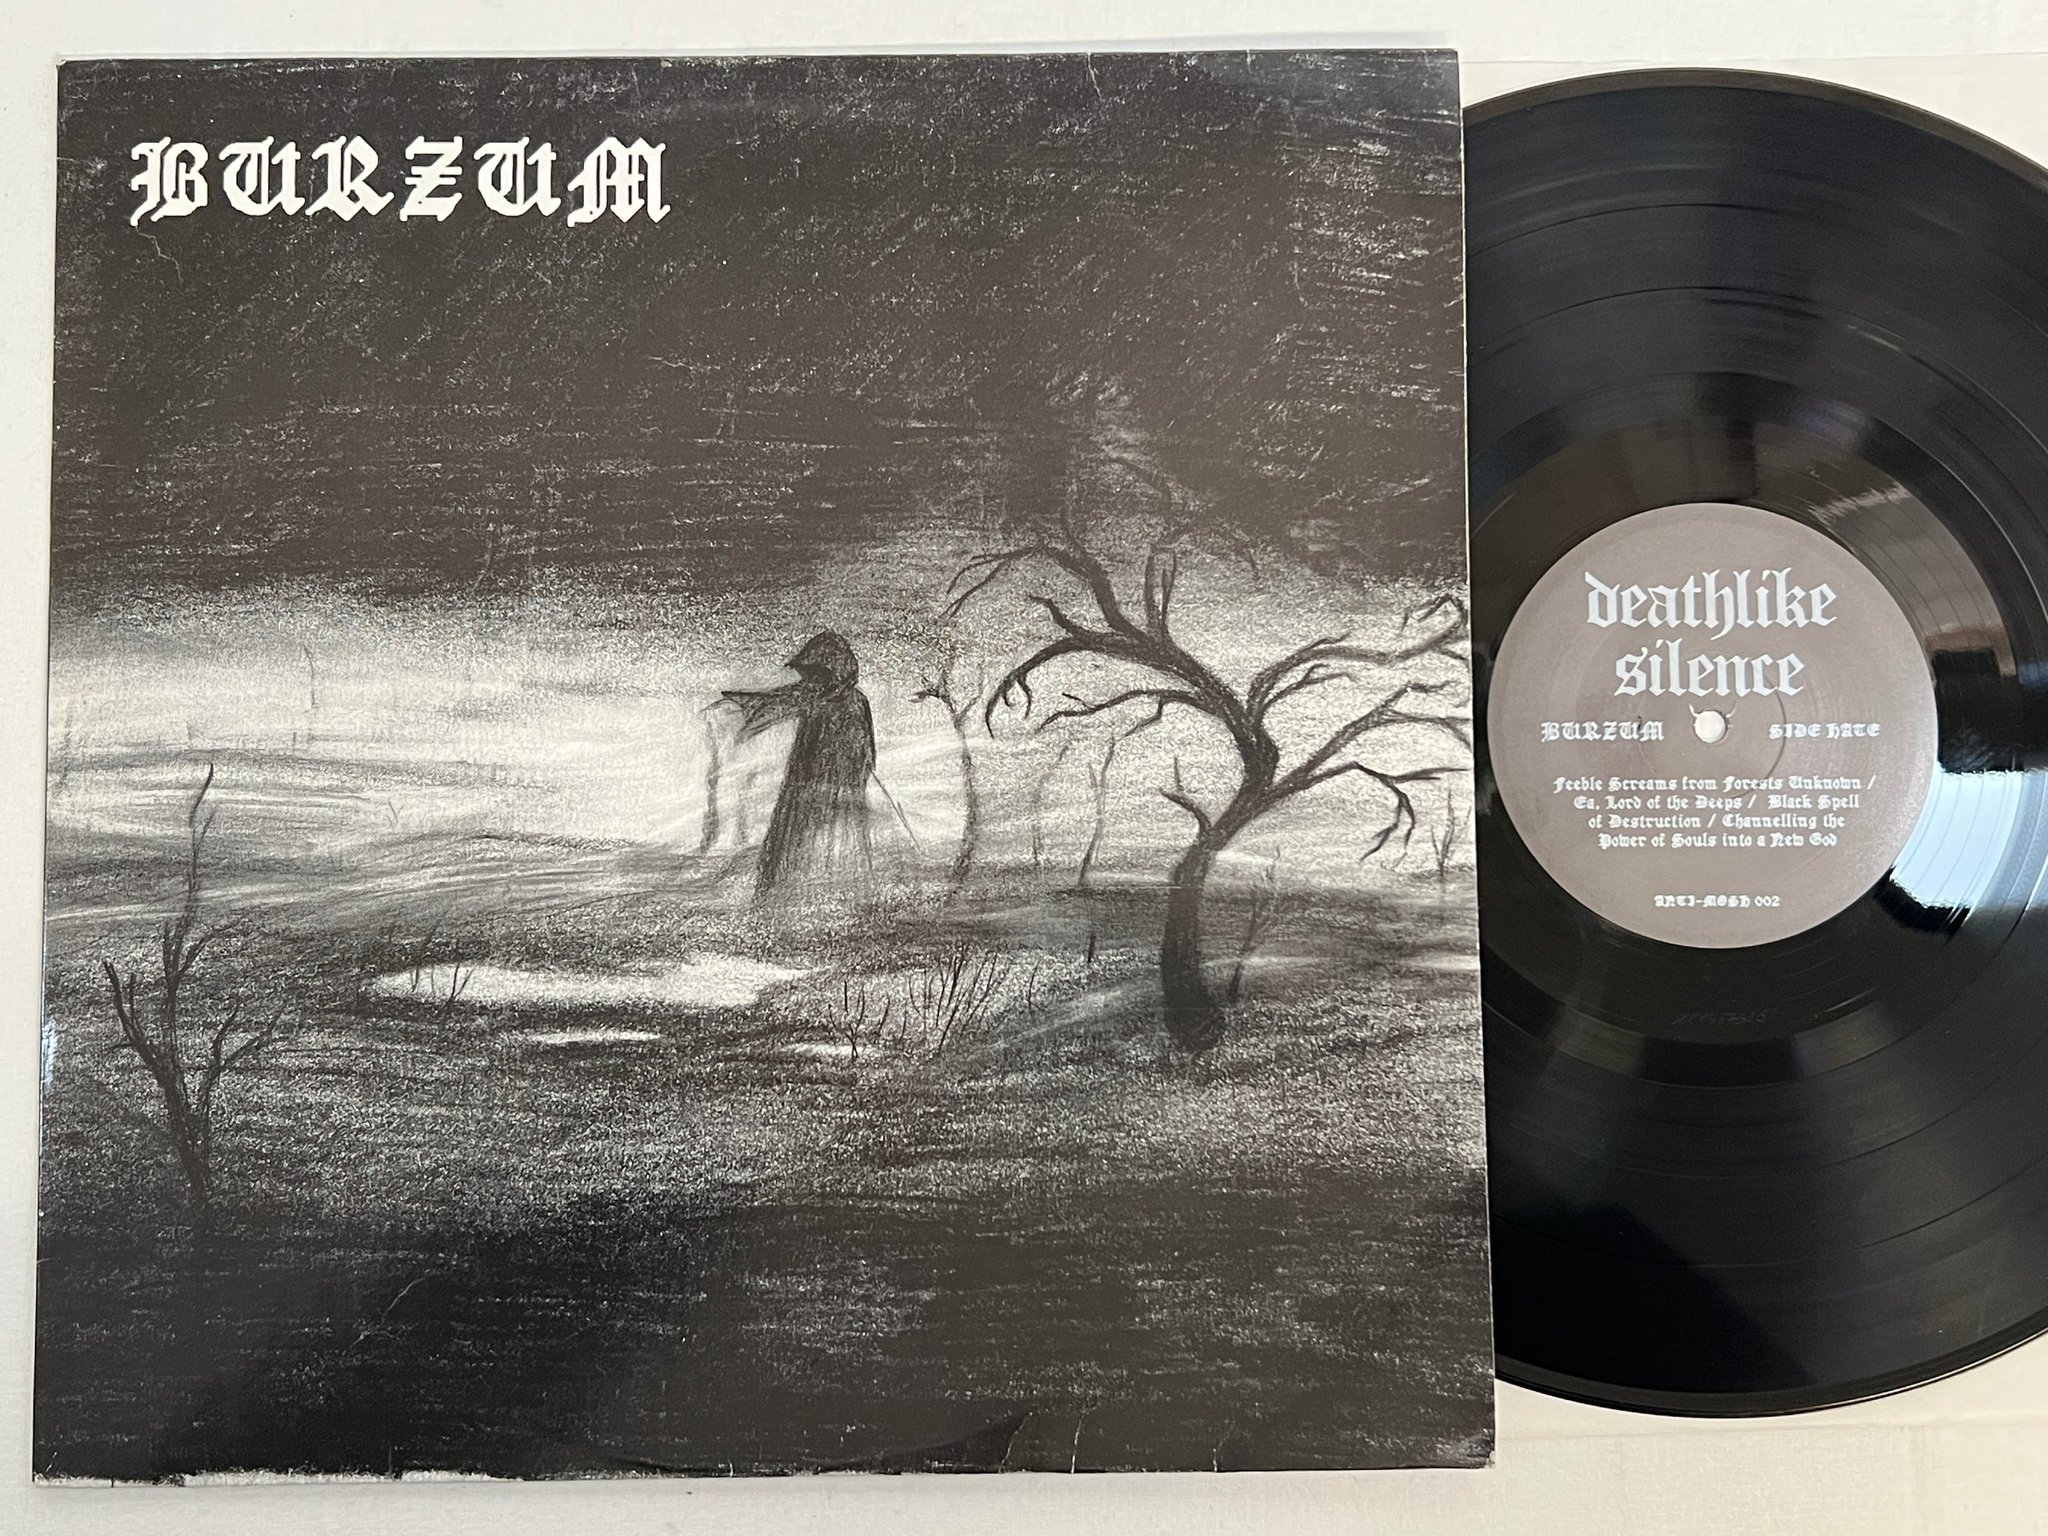 Omslagsbild för skivan BURZUM s/t LP -92 DEATHLIKE SILENCE ANTI-MOSH 002 ** ultra rare black metal **